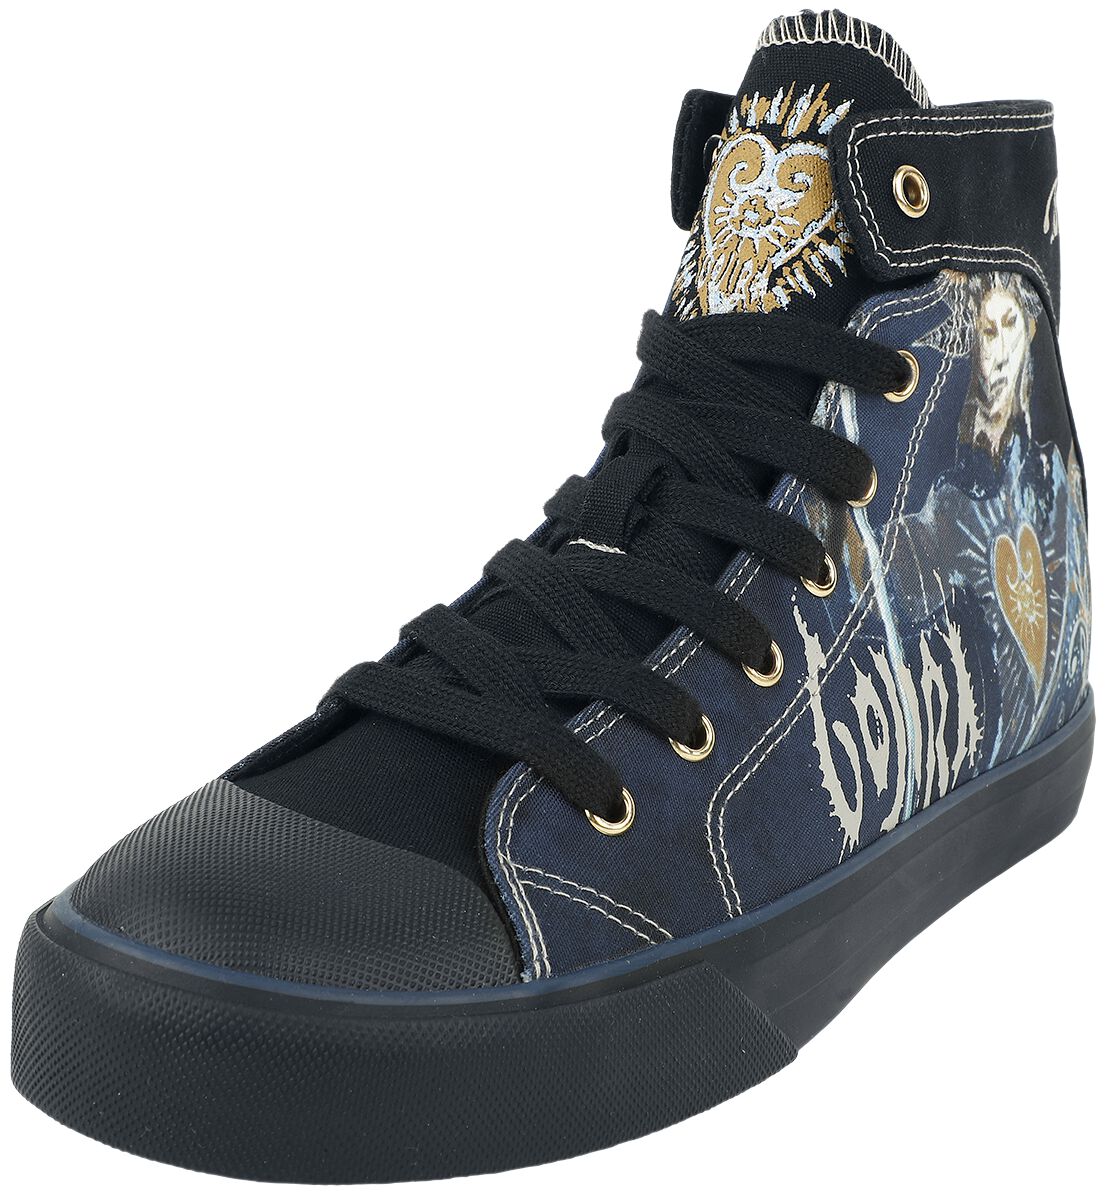 Gojira Sneaker high - EMP Signature Collection - EU38 bis EU39 - Größe EU39 - multicolor  - EMP exklusives Merchandise!